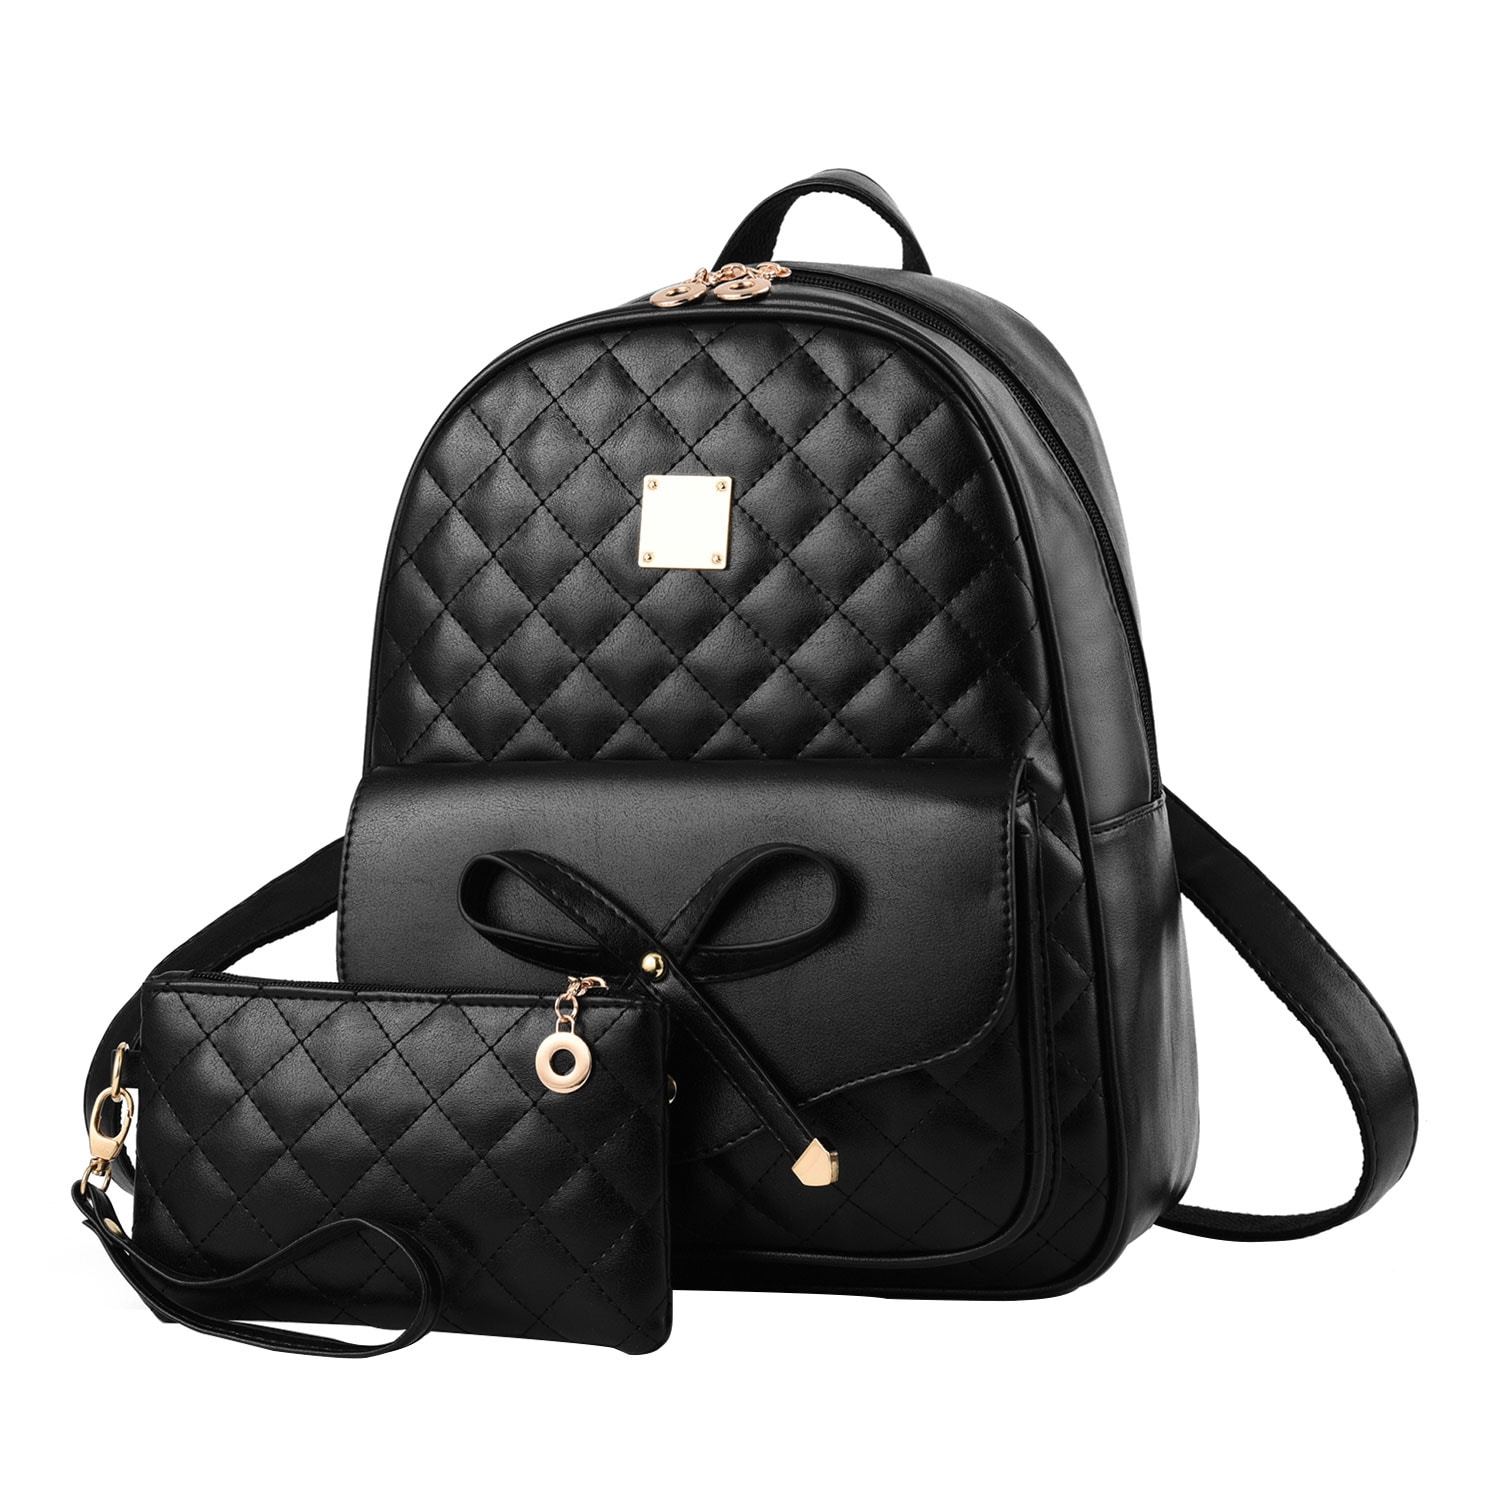 Mini Backpack For Girls Cute Cat Design Fashion Leather Bag Women Casual Fashion Black